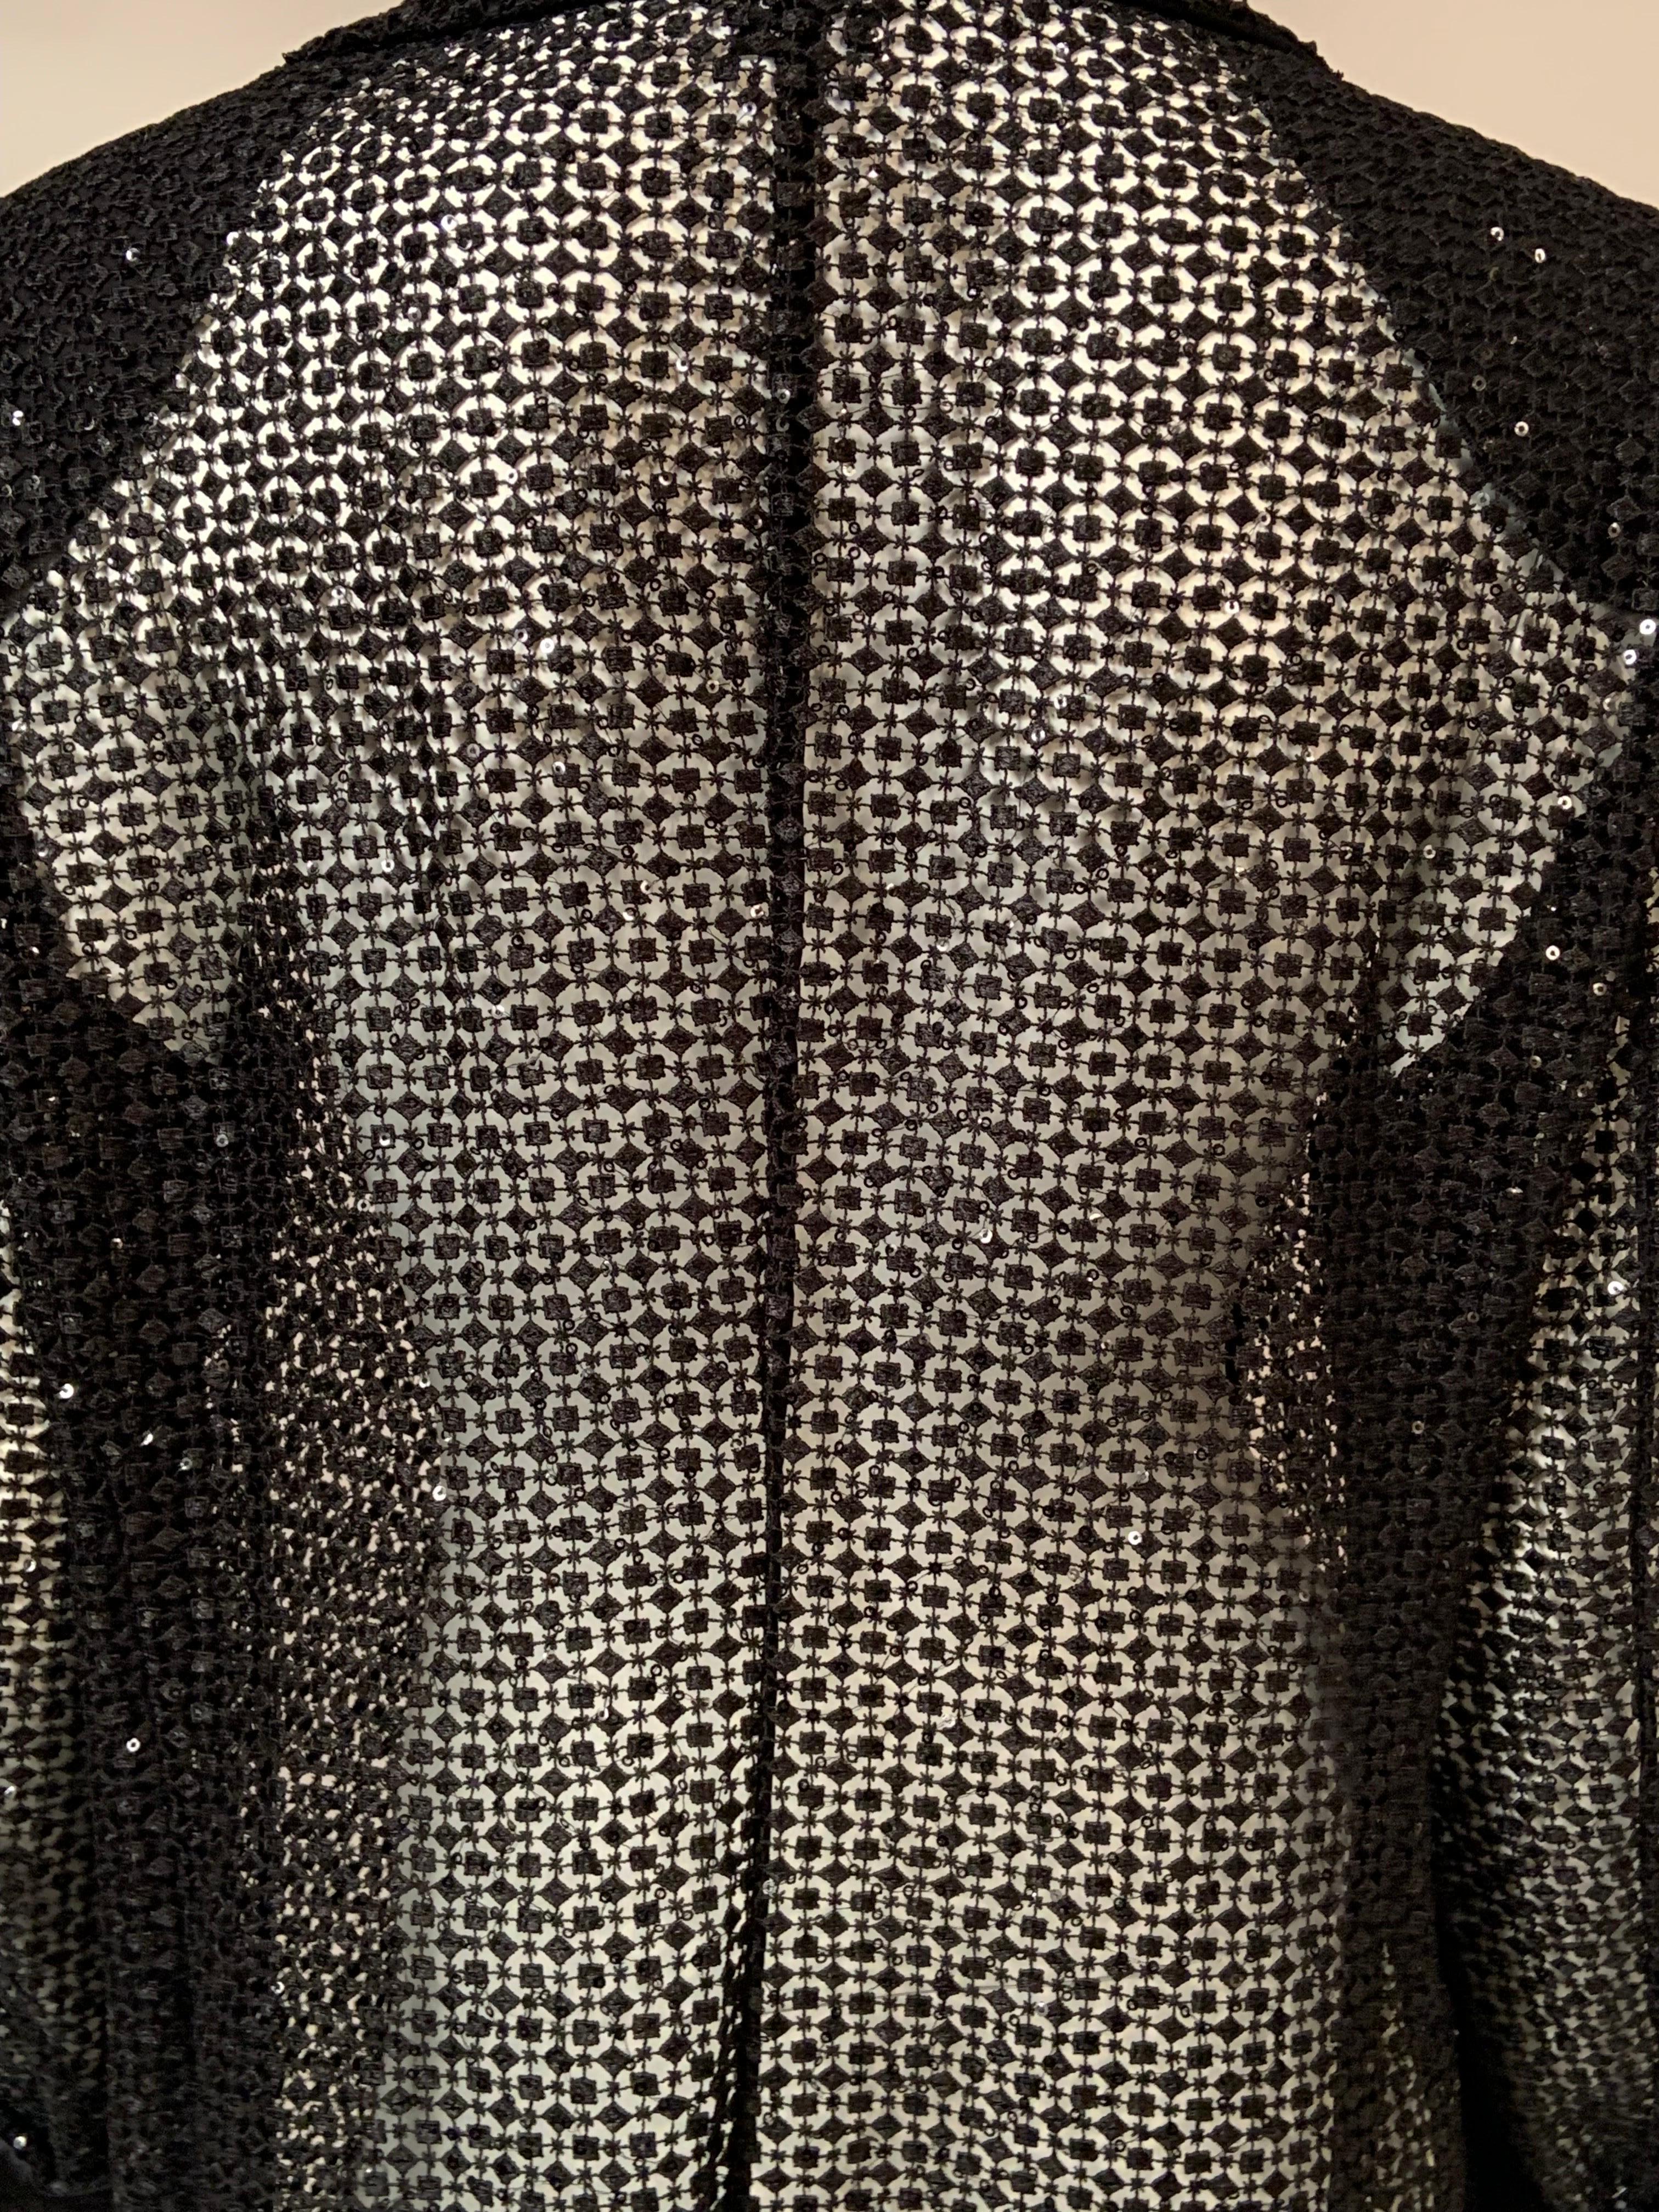 Armani Black Satin Trimmed Open Work Jacket with Sequins Larger Size 4